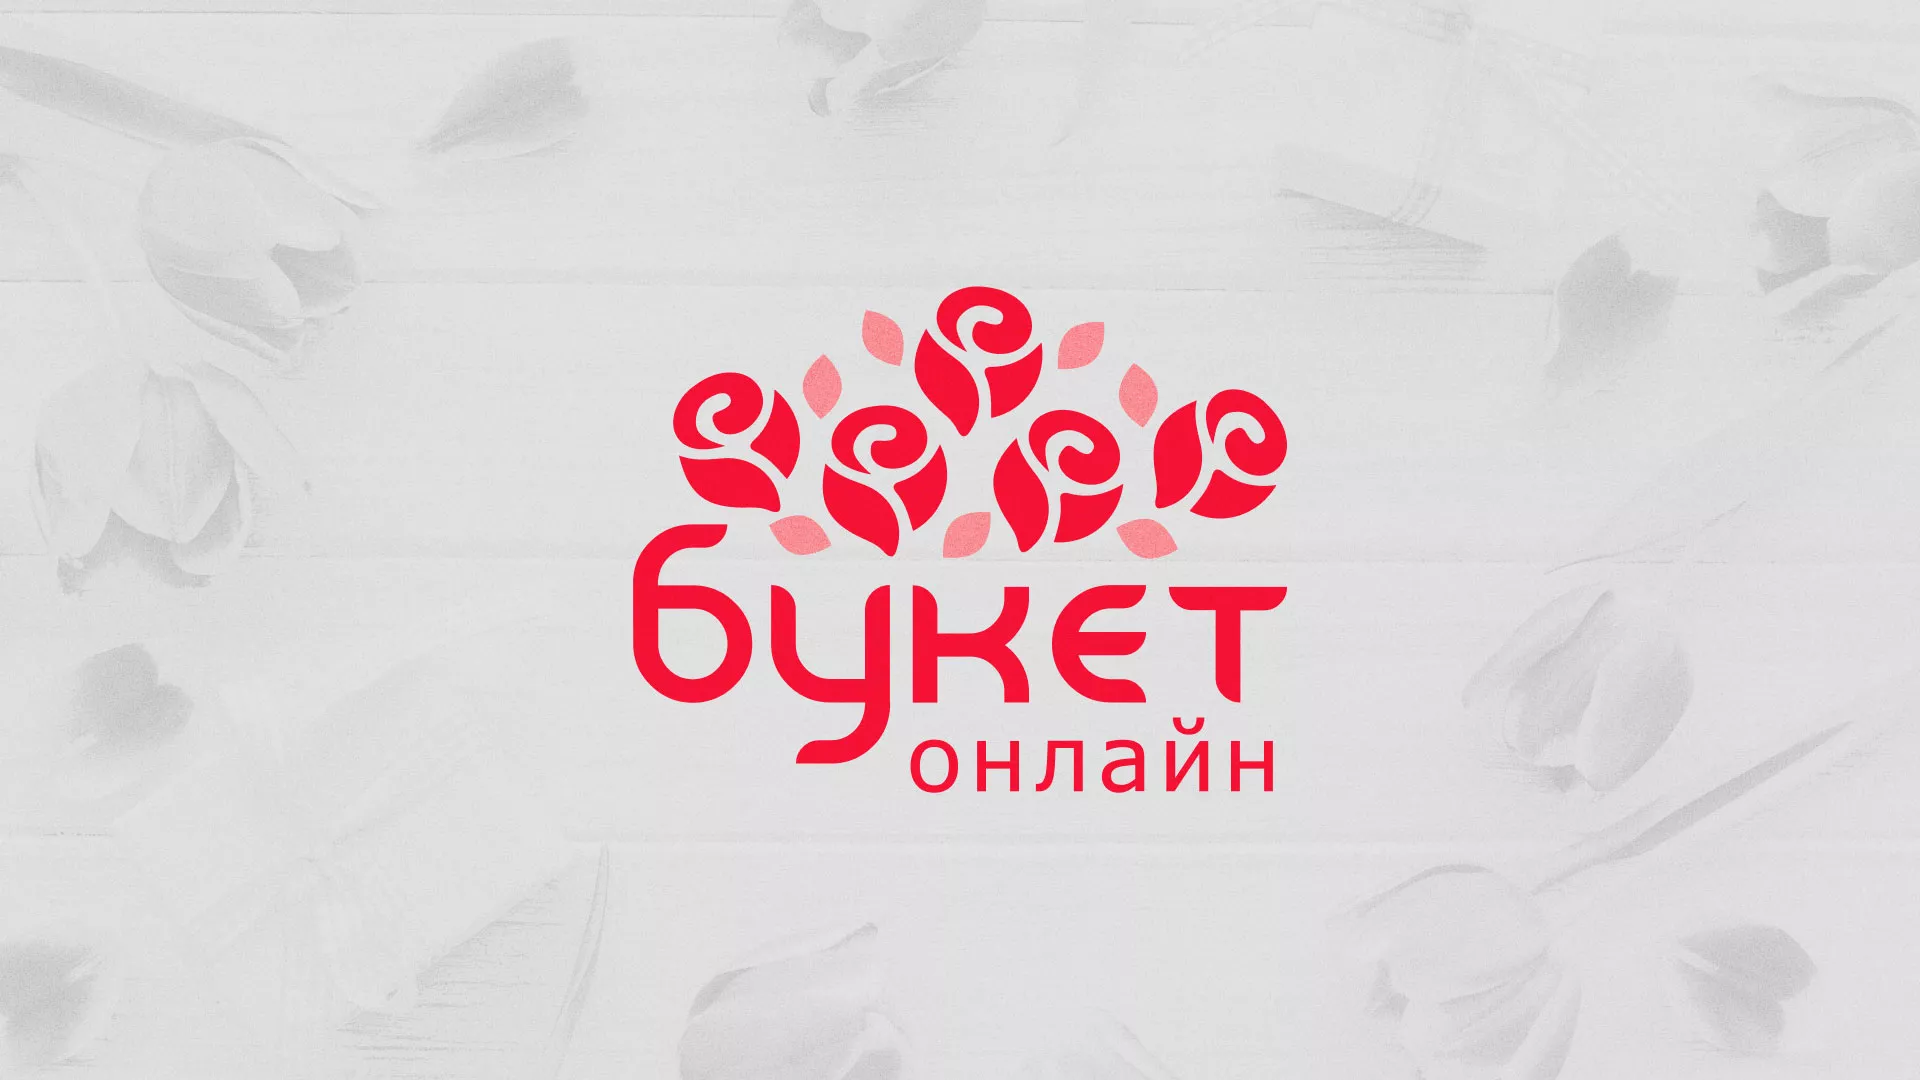 Создание интернет-магазина «Букет-онлайн» по цветам в Астрахани